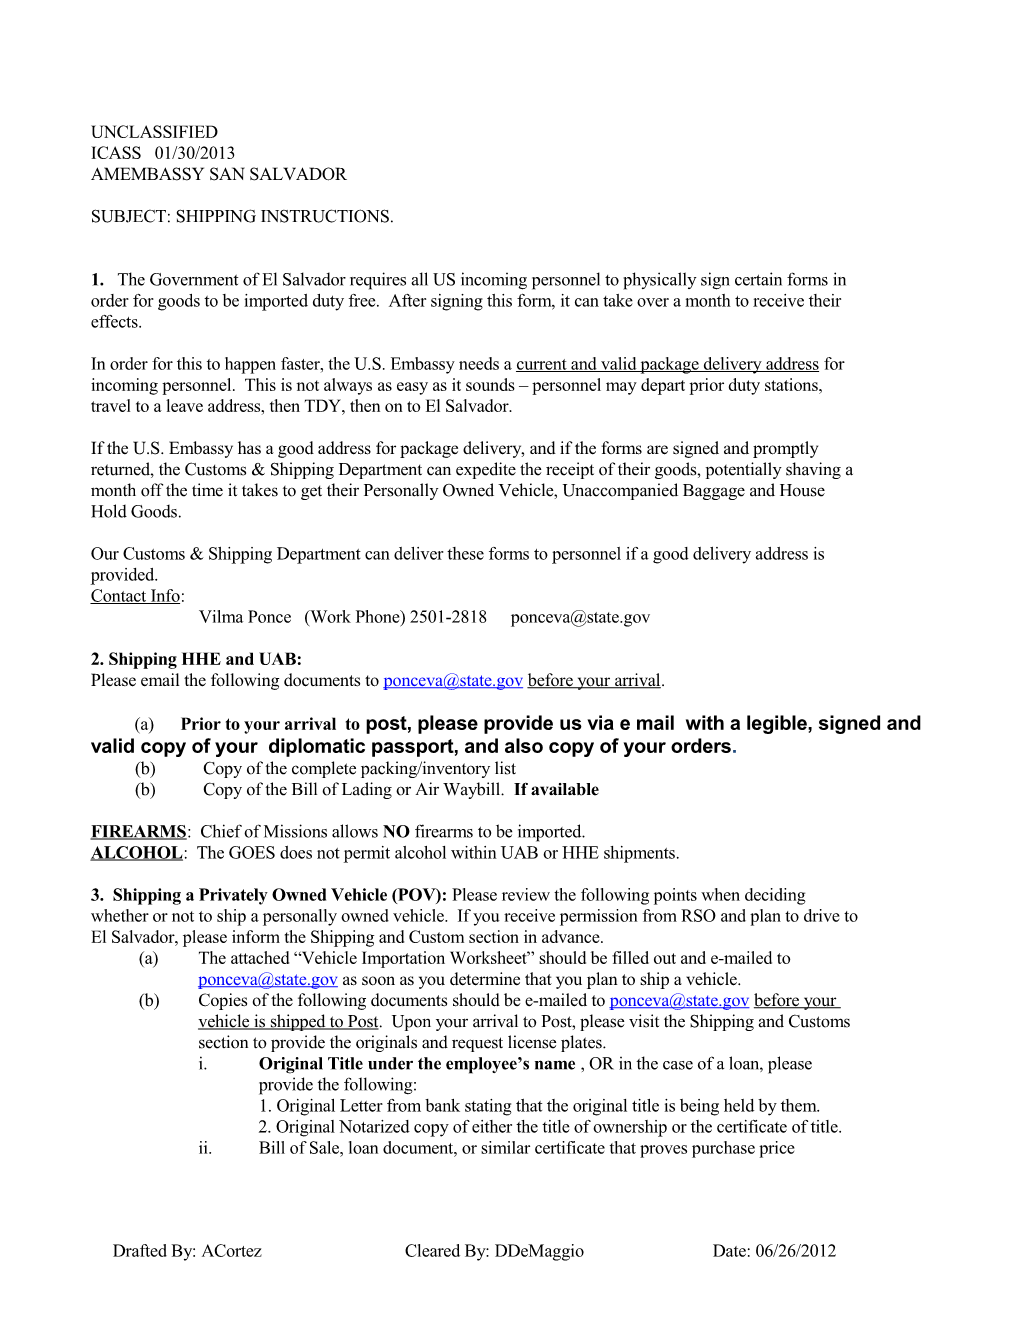 Shipping Instructions for Importation (Jun 26 2012)